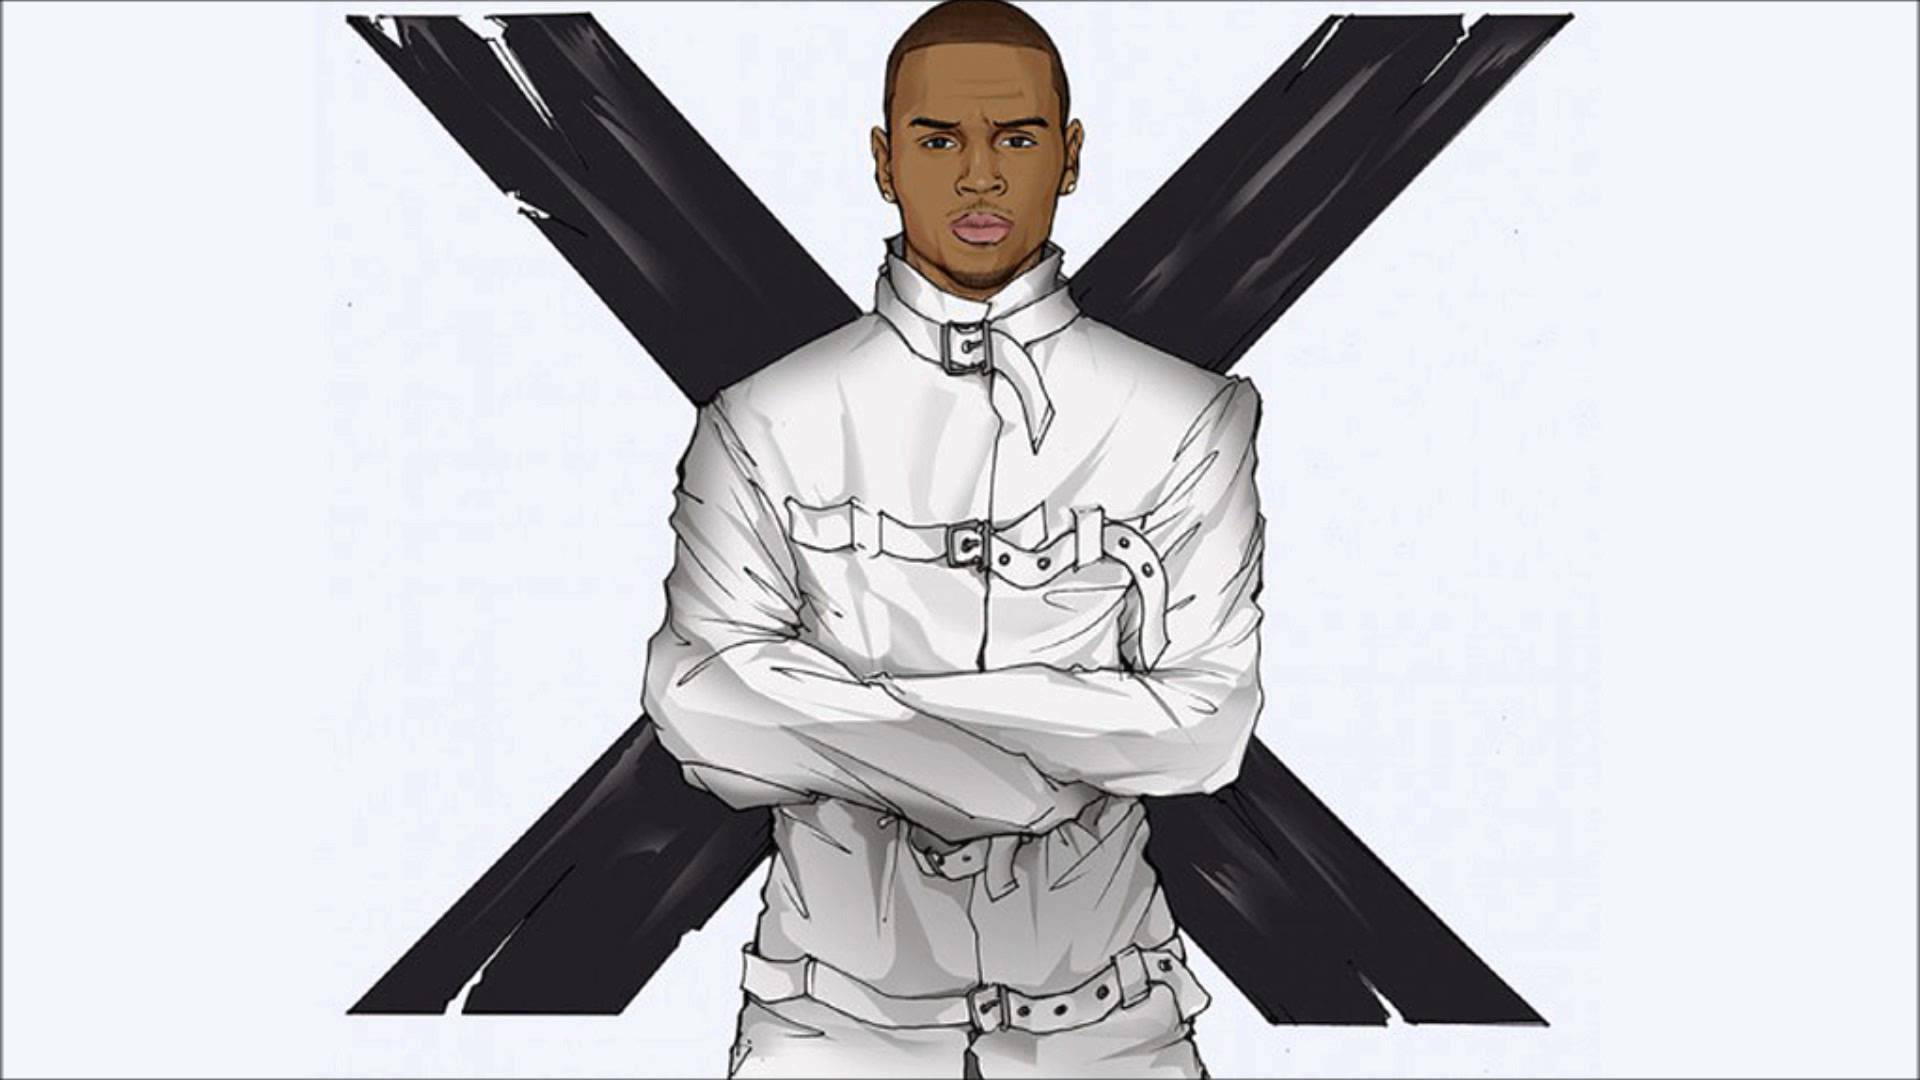 Chris Brown Wallpapers, Dancer, Hd Images, X, Music Album ...